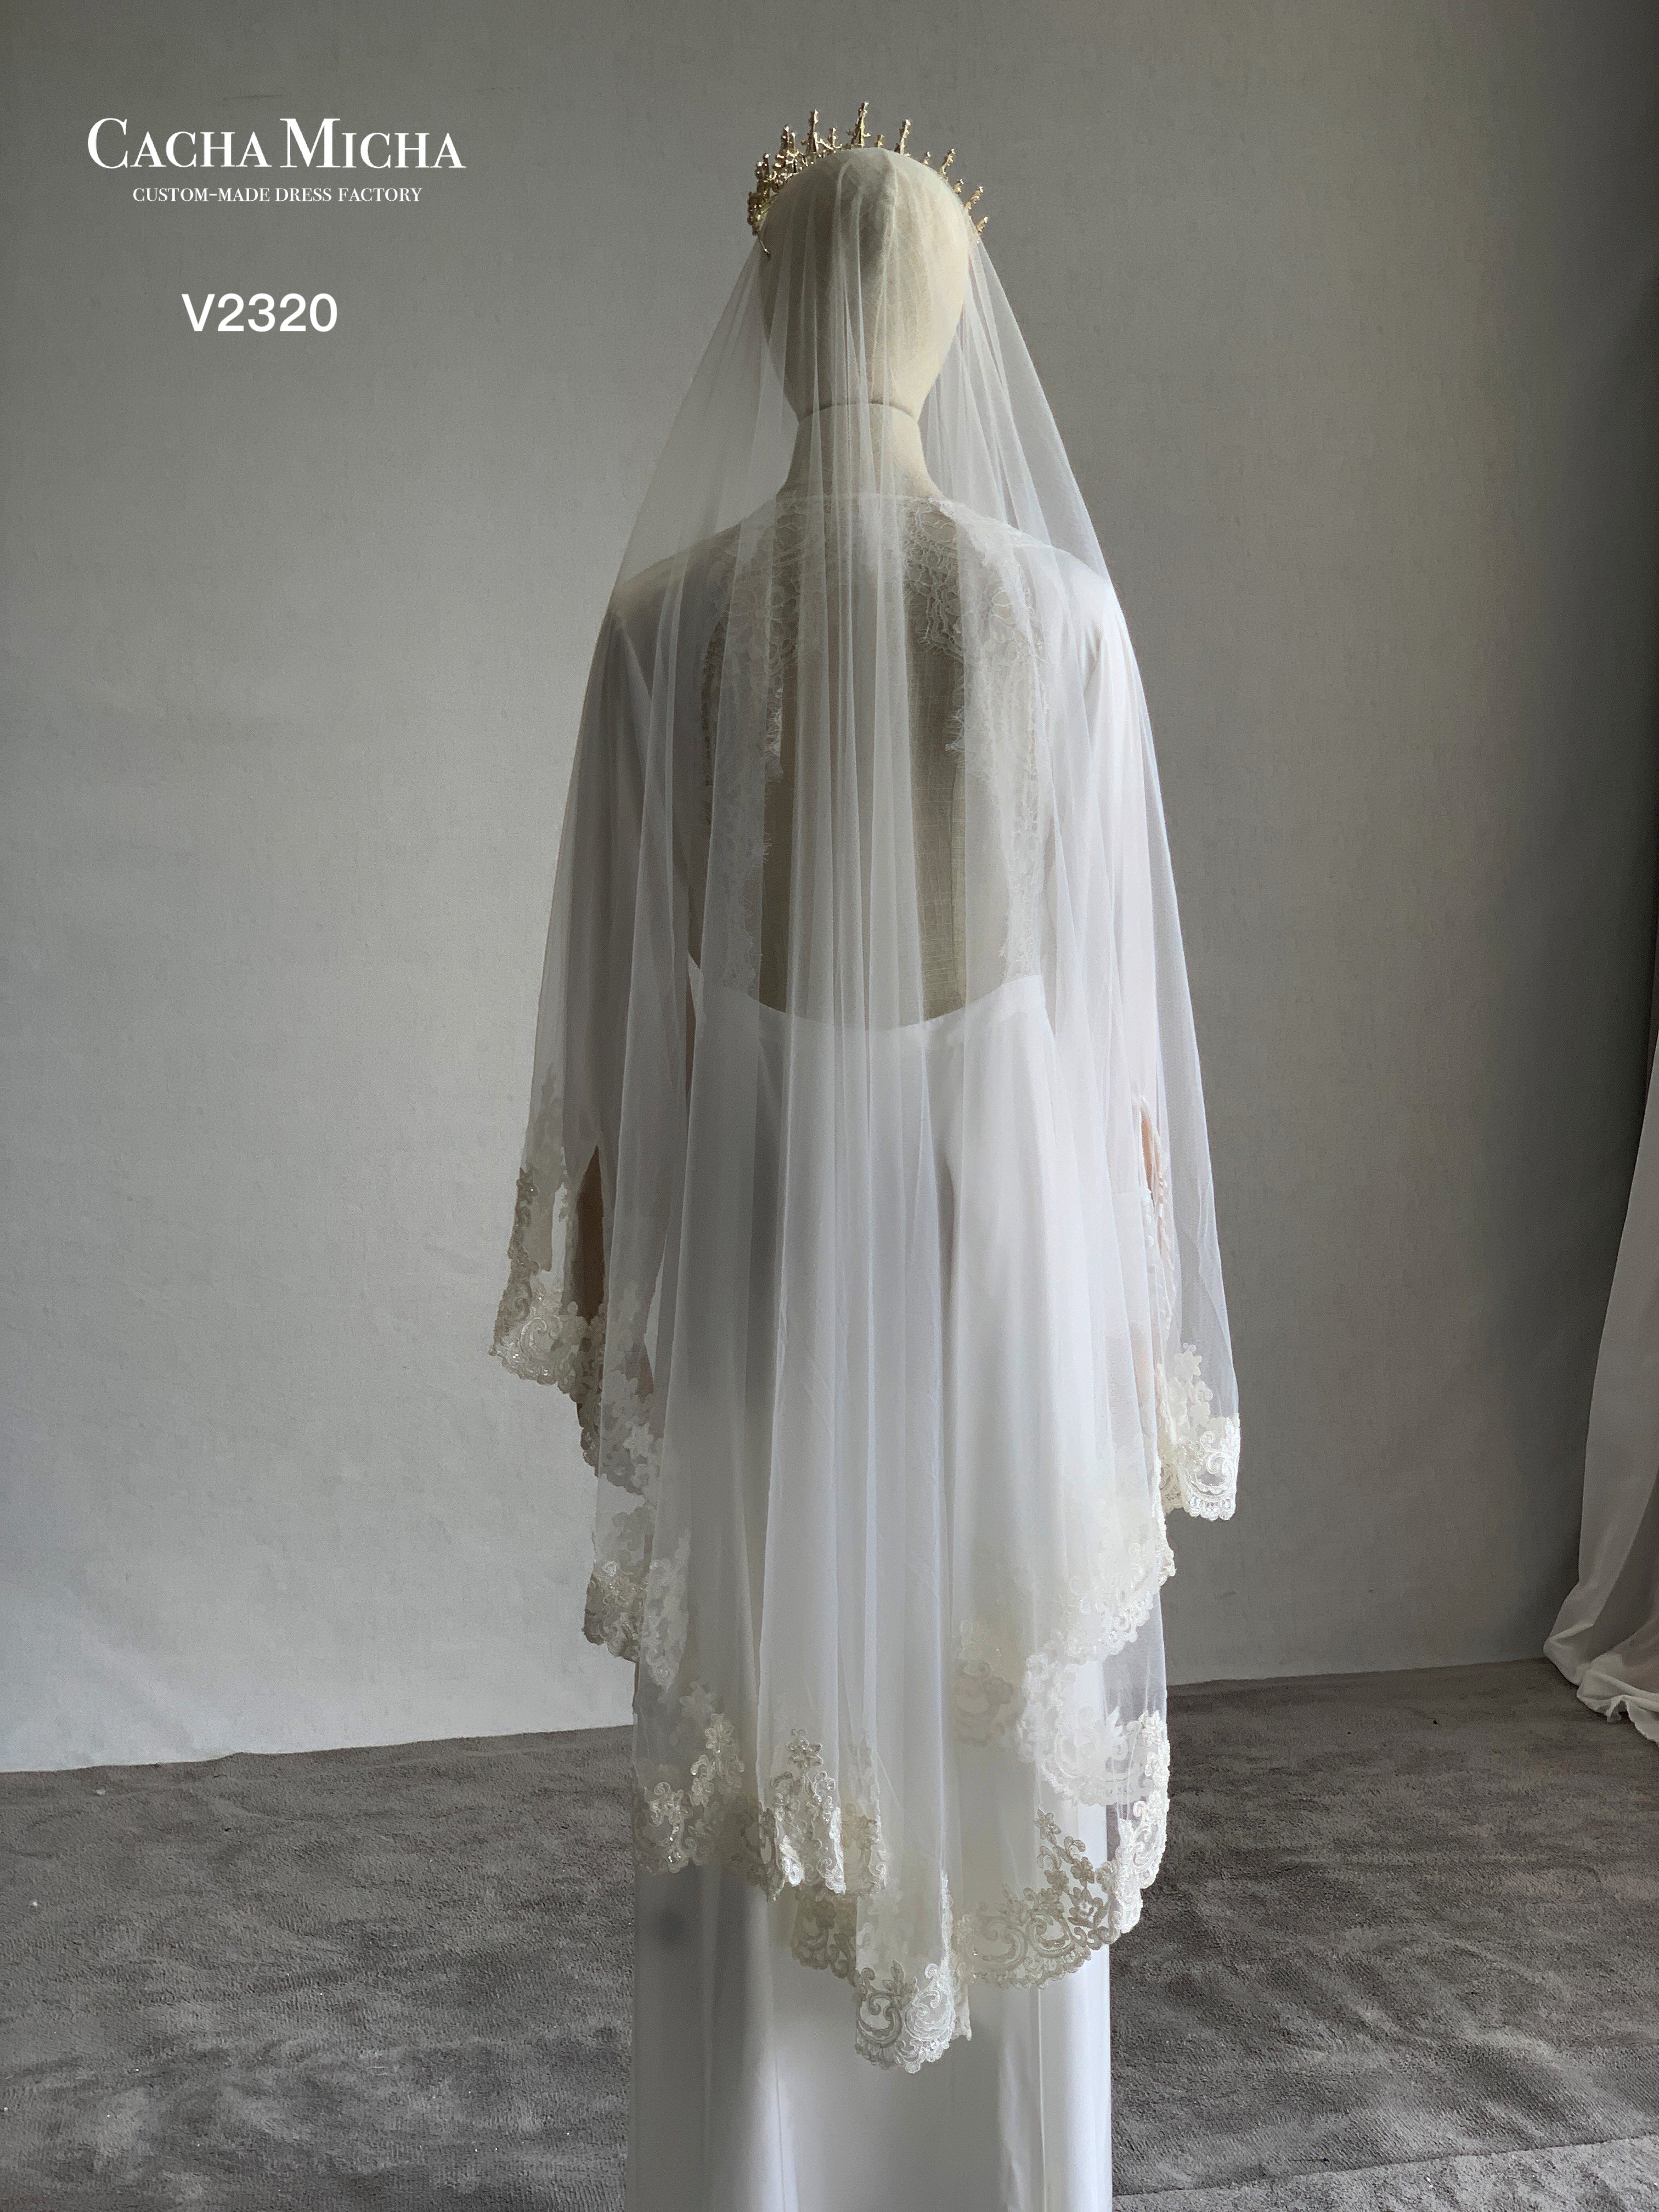 French Lace Trimming Waltz Length Bridal Veil V2320